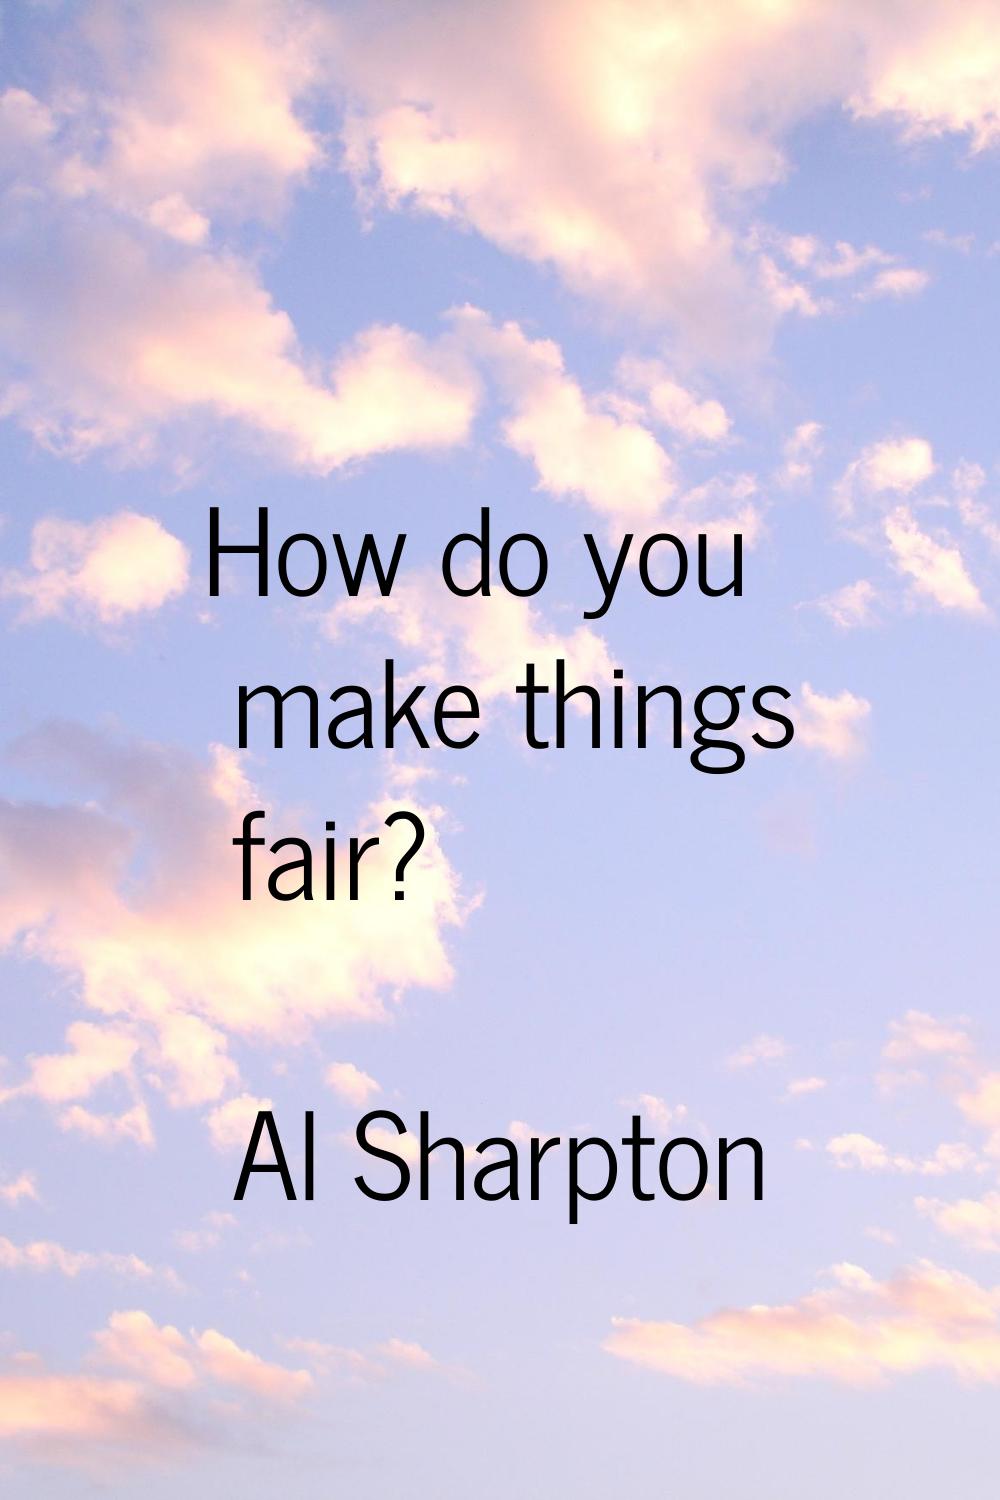 How do you make things fair?